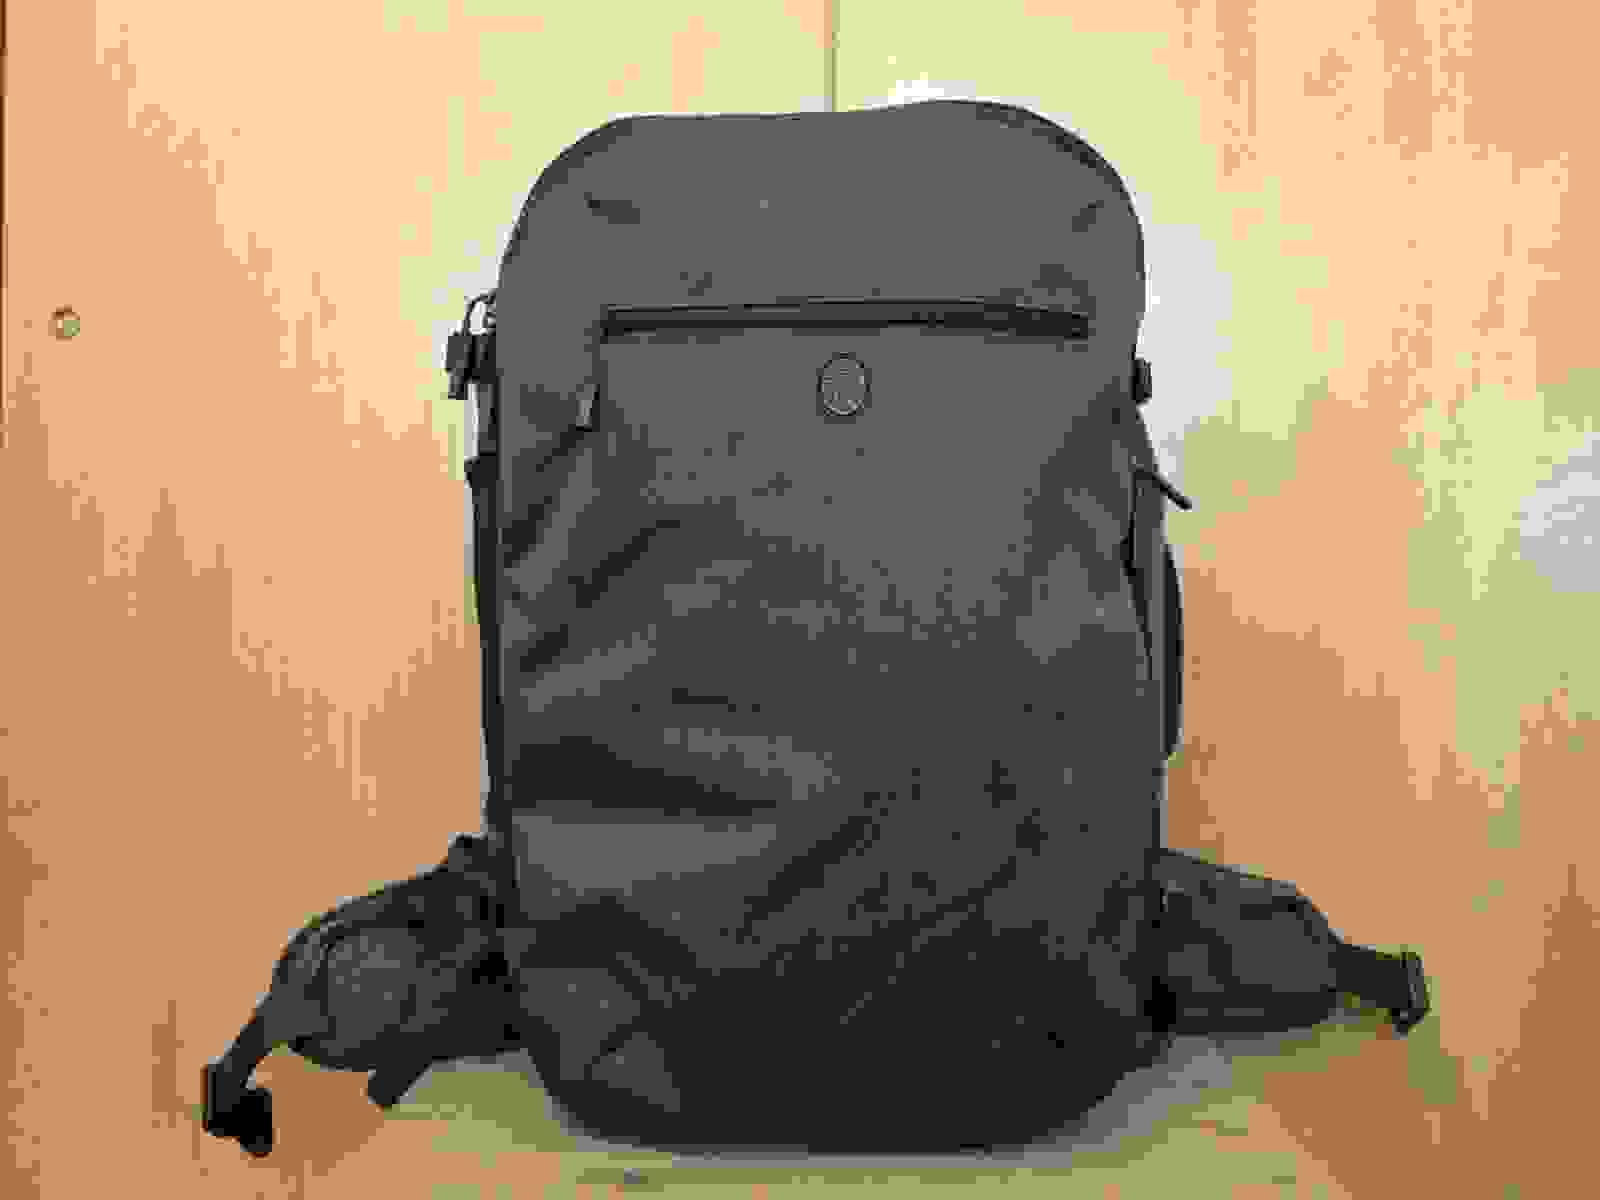 Tortuga Setout Backpack